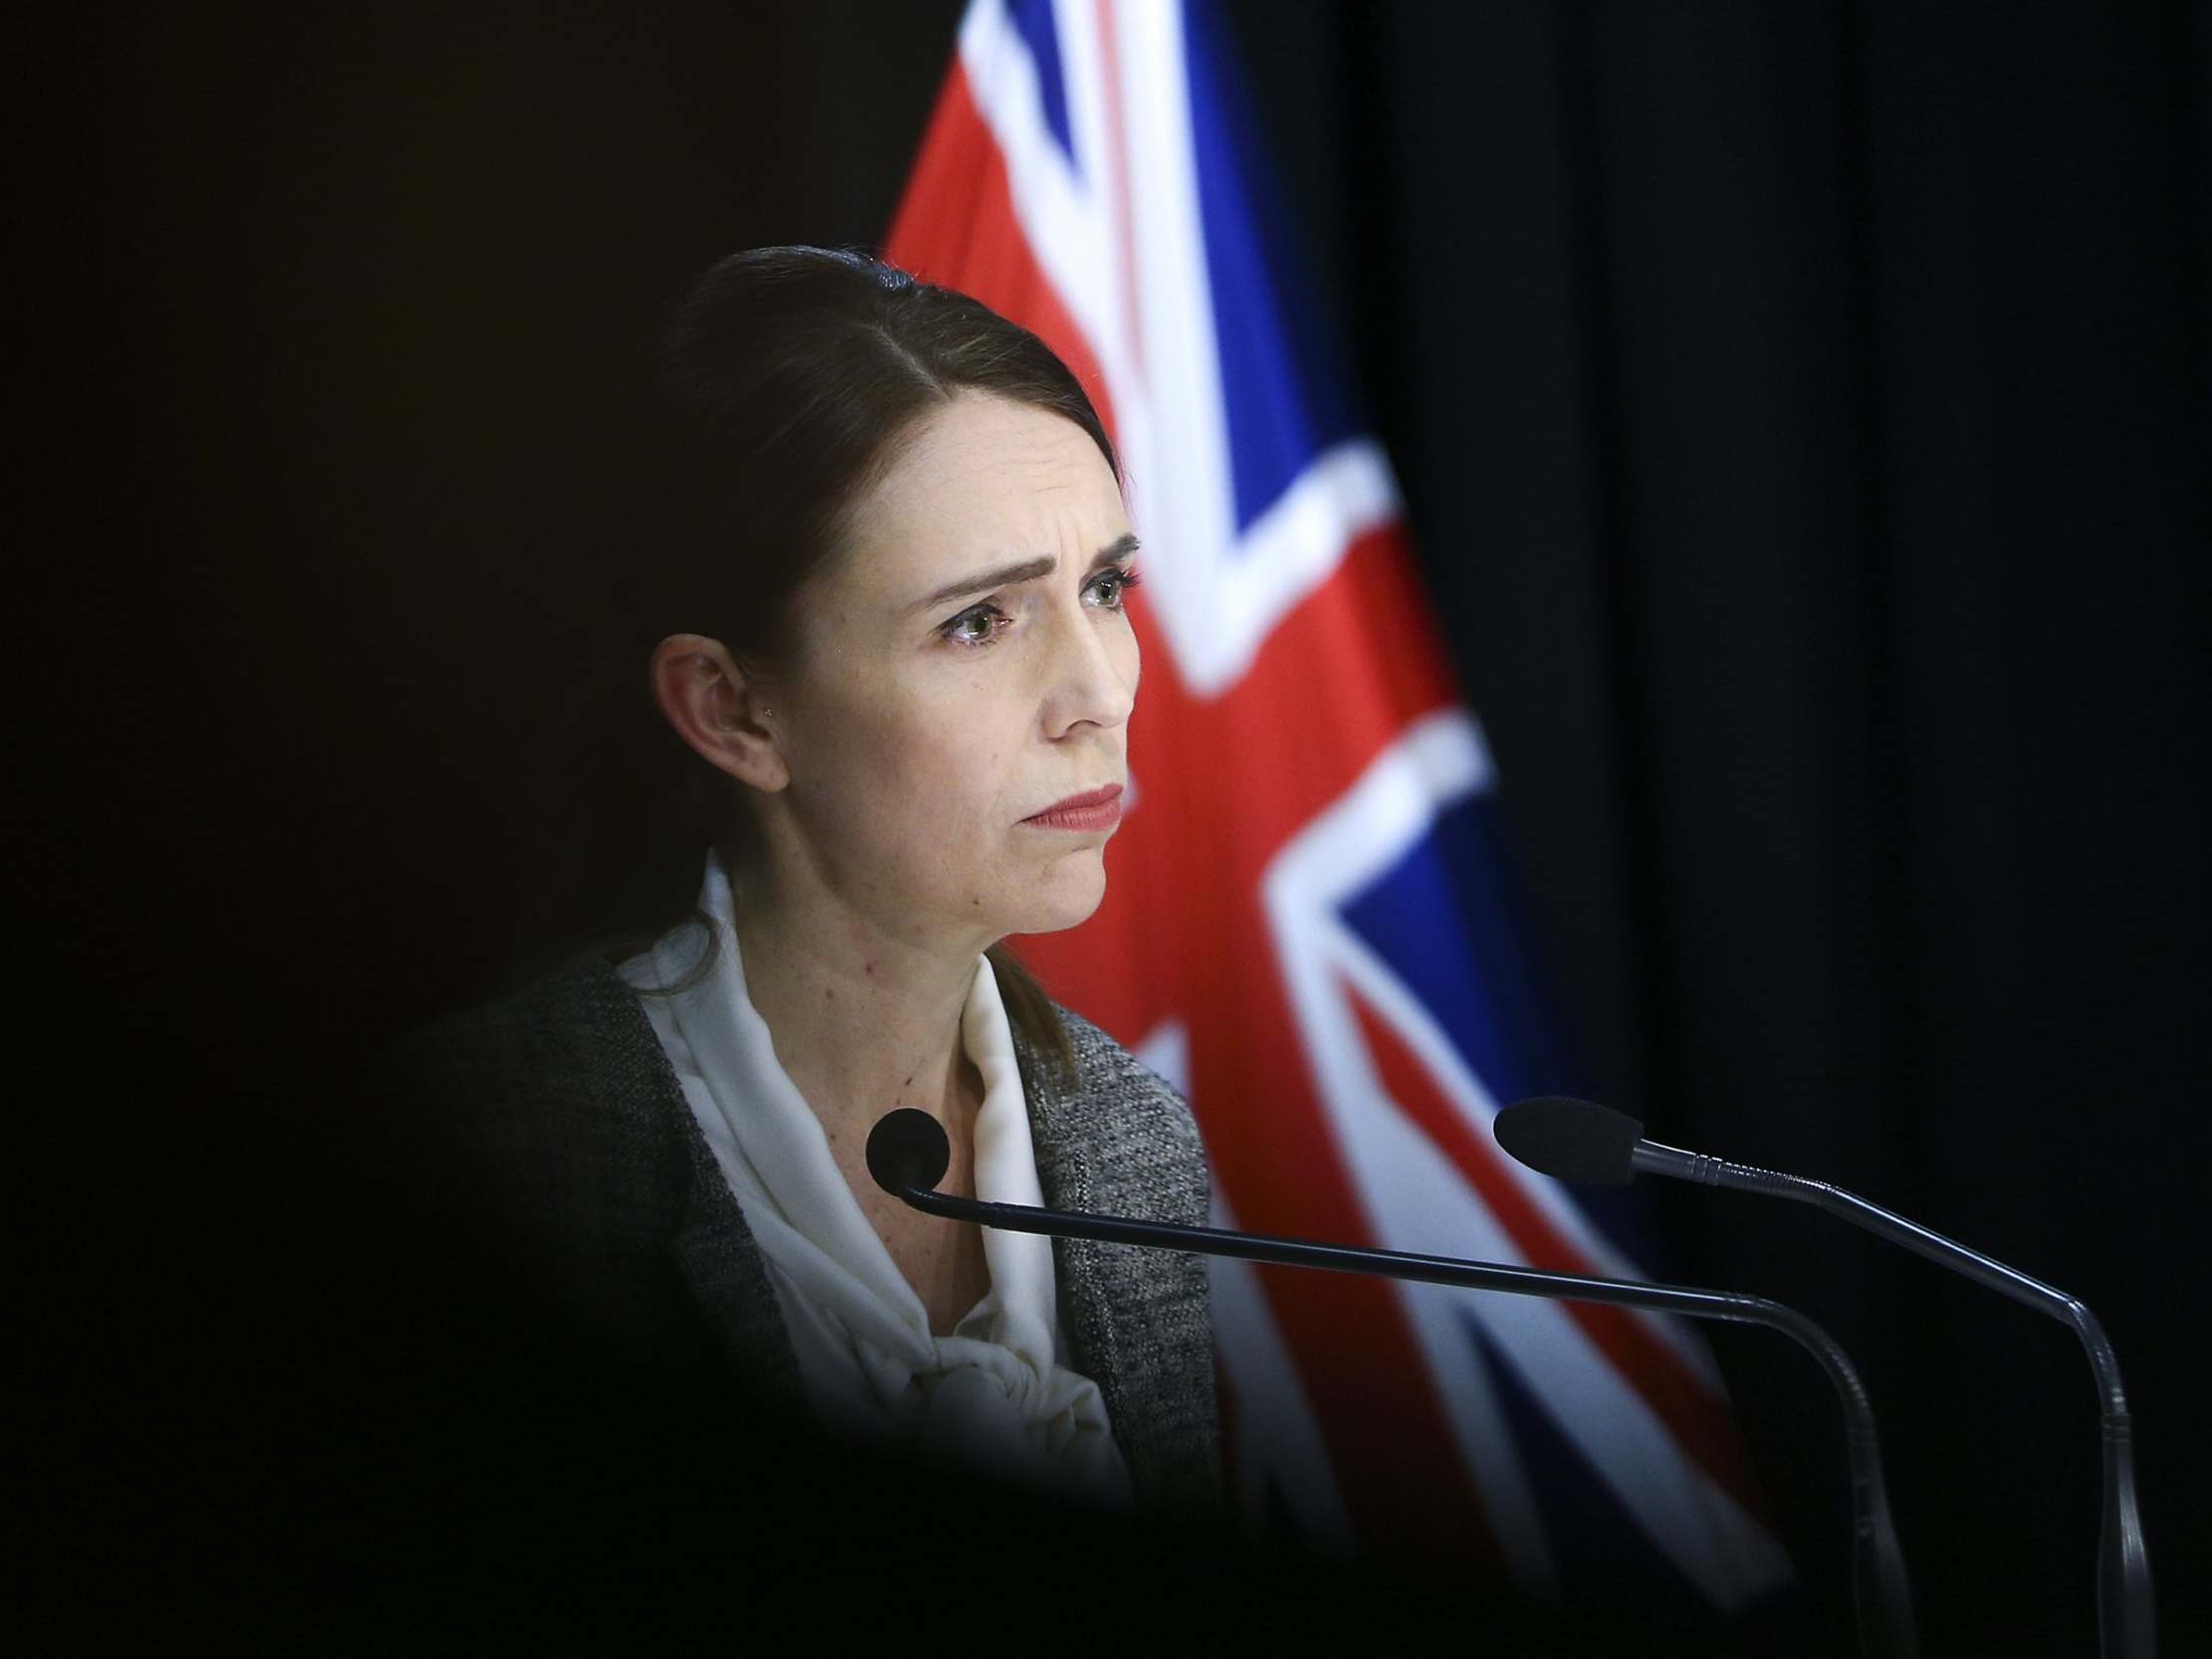 Coronavirus is growing': Jacinda Ardern rejects calls to open New Zealand borders